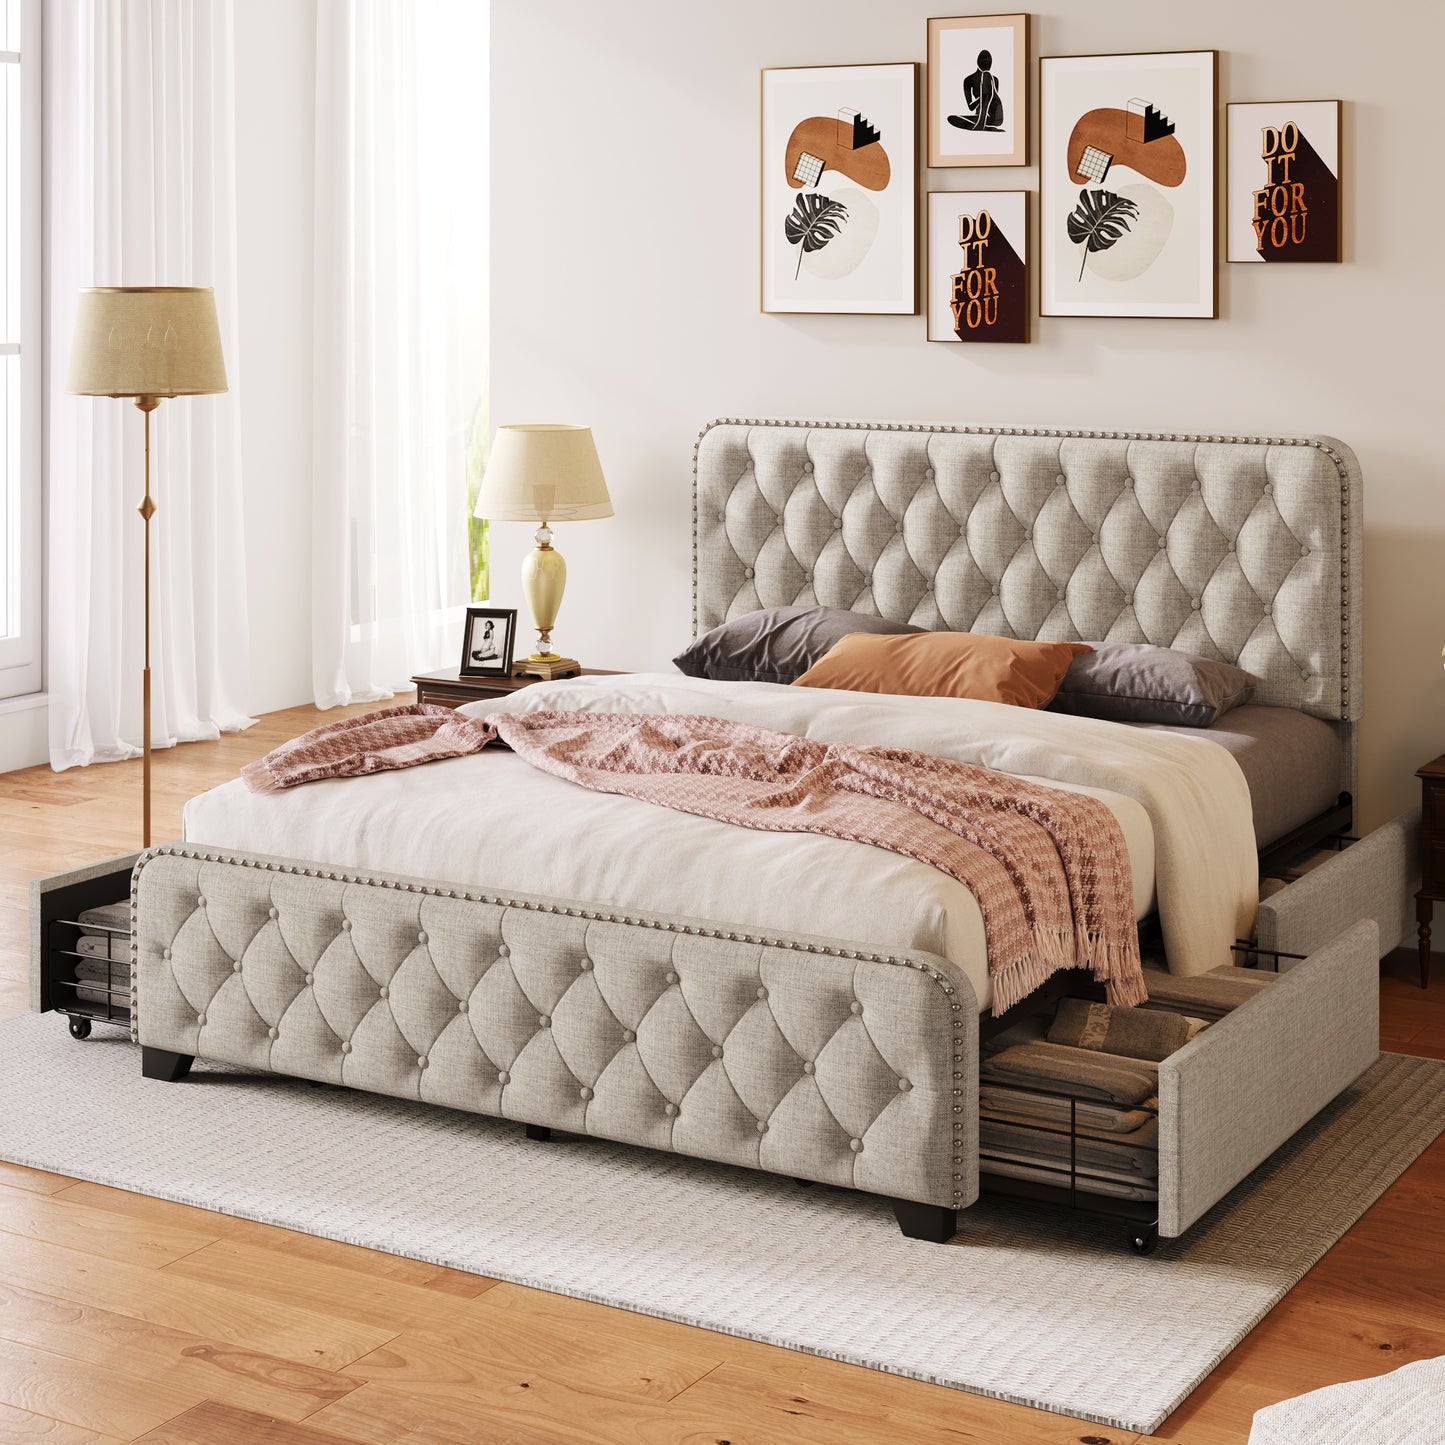 Vurste Upholstered Metal Platform Bed- Queen